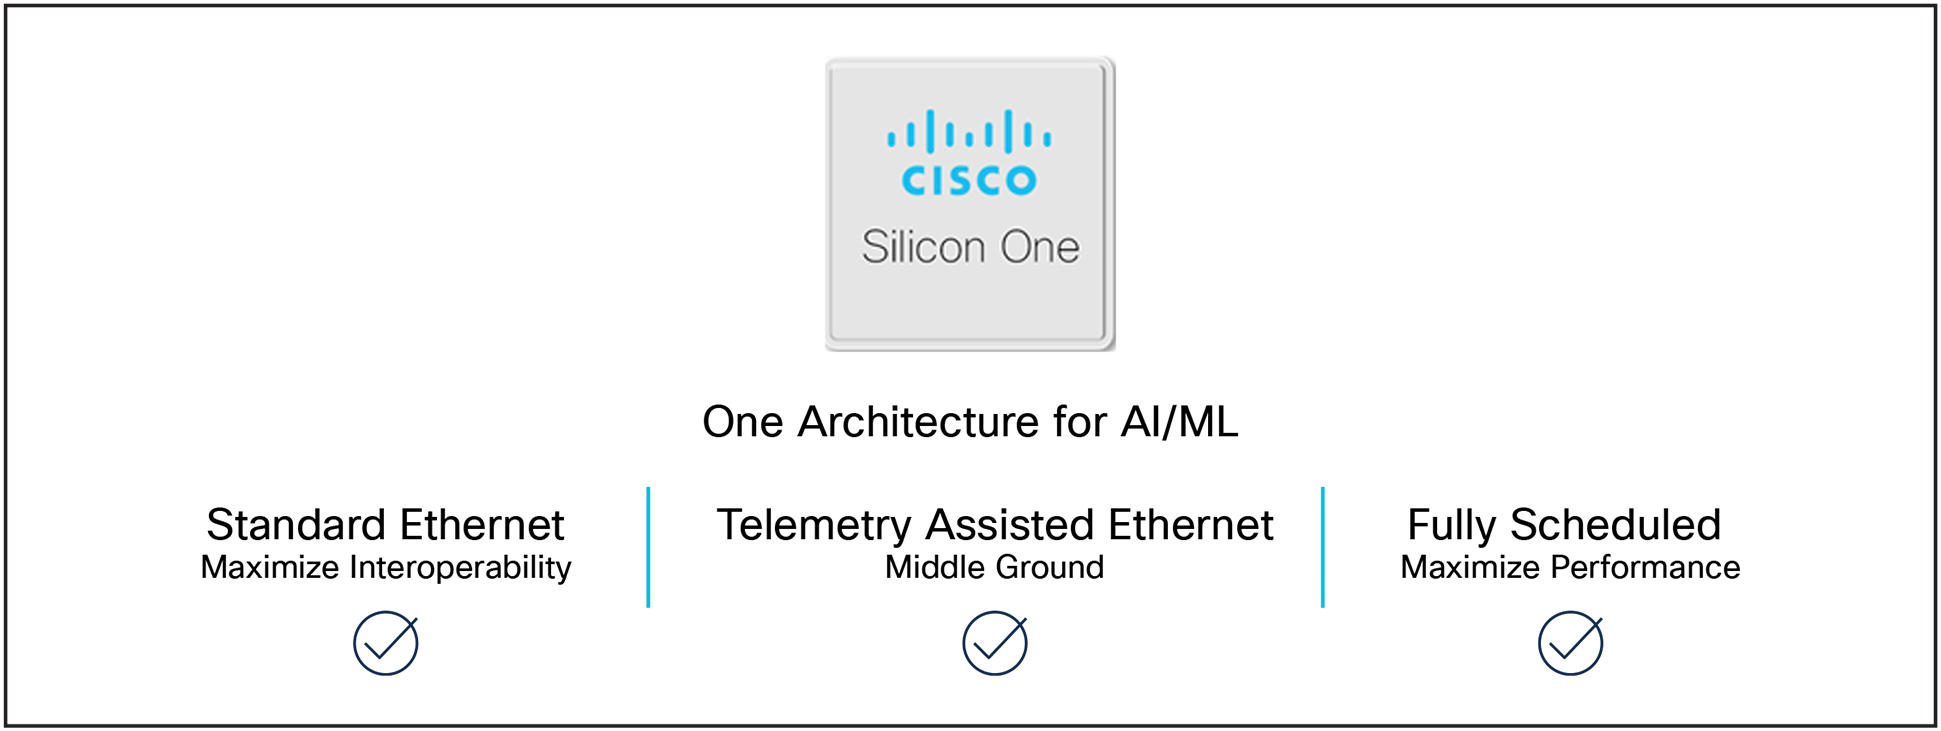 Cisco Silicon One; Evolve your network